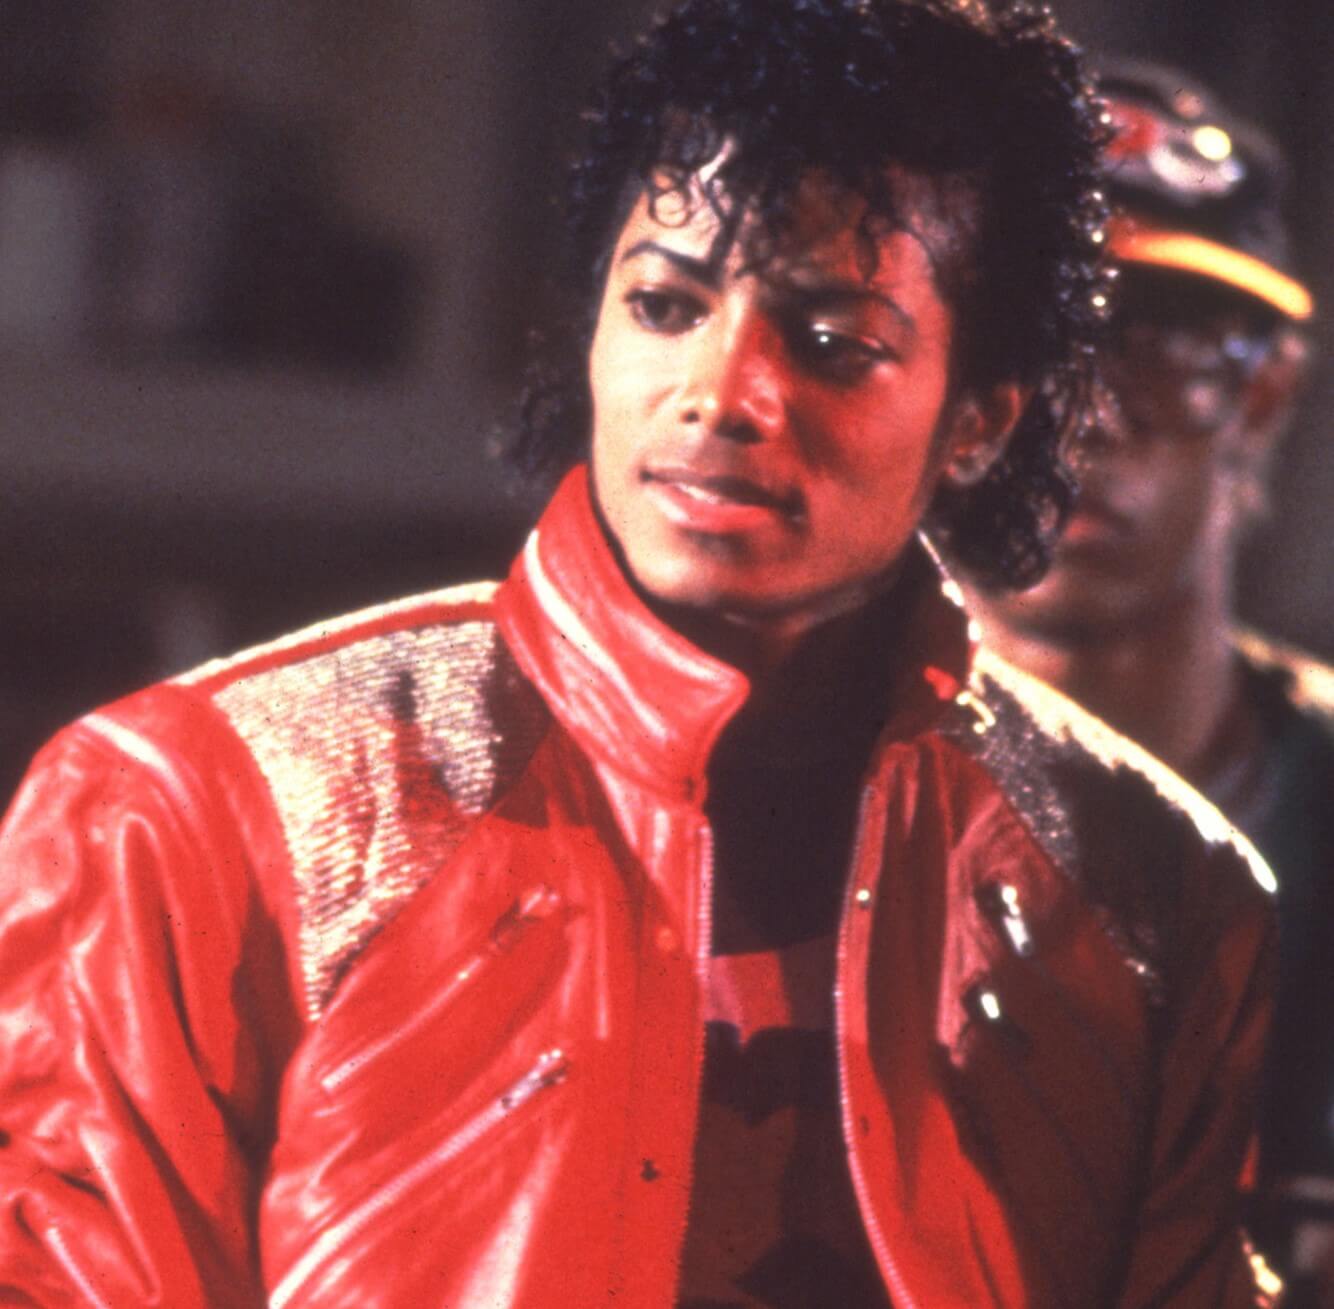 "Bad" singer Michael Jackson wearing a jacket